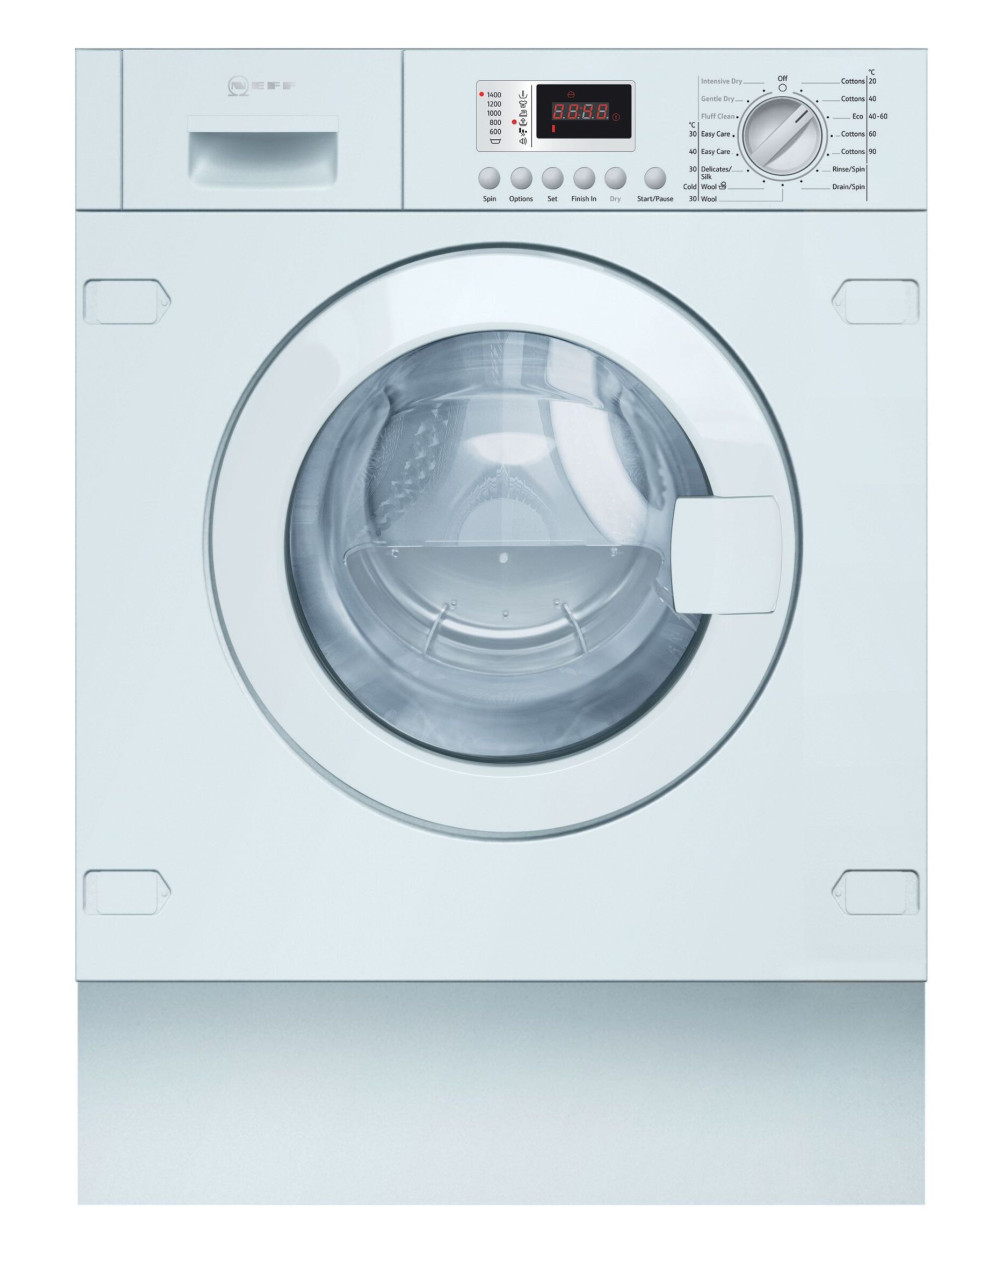 NEFF V6320X2GB 7kg/4kg Washer Dryer featured image